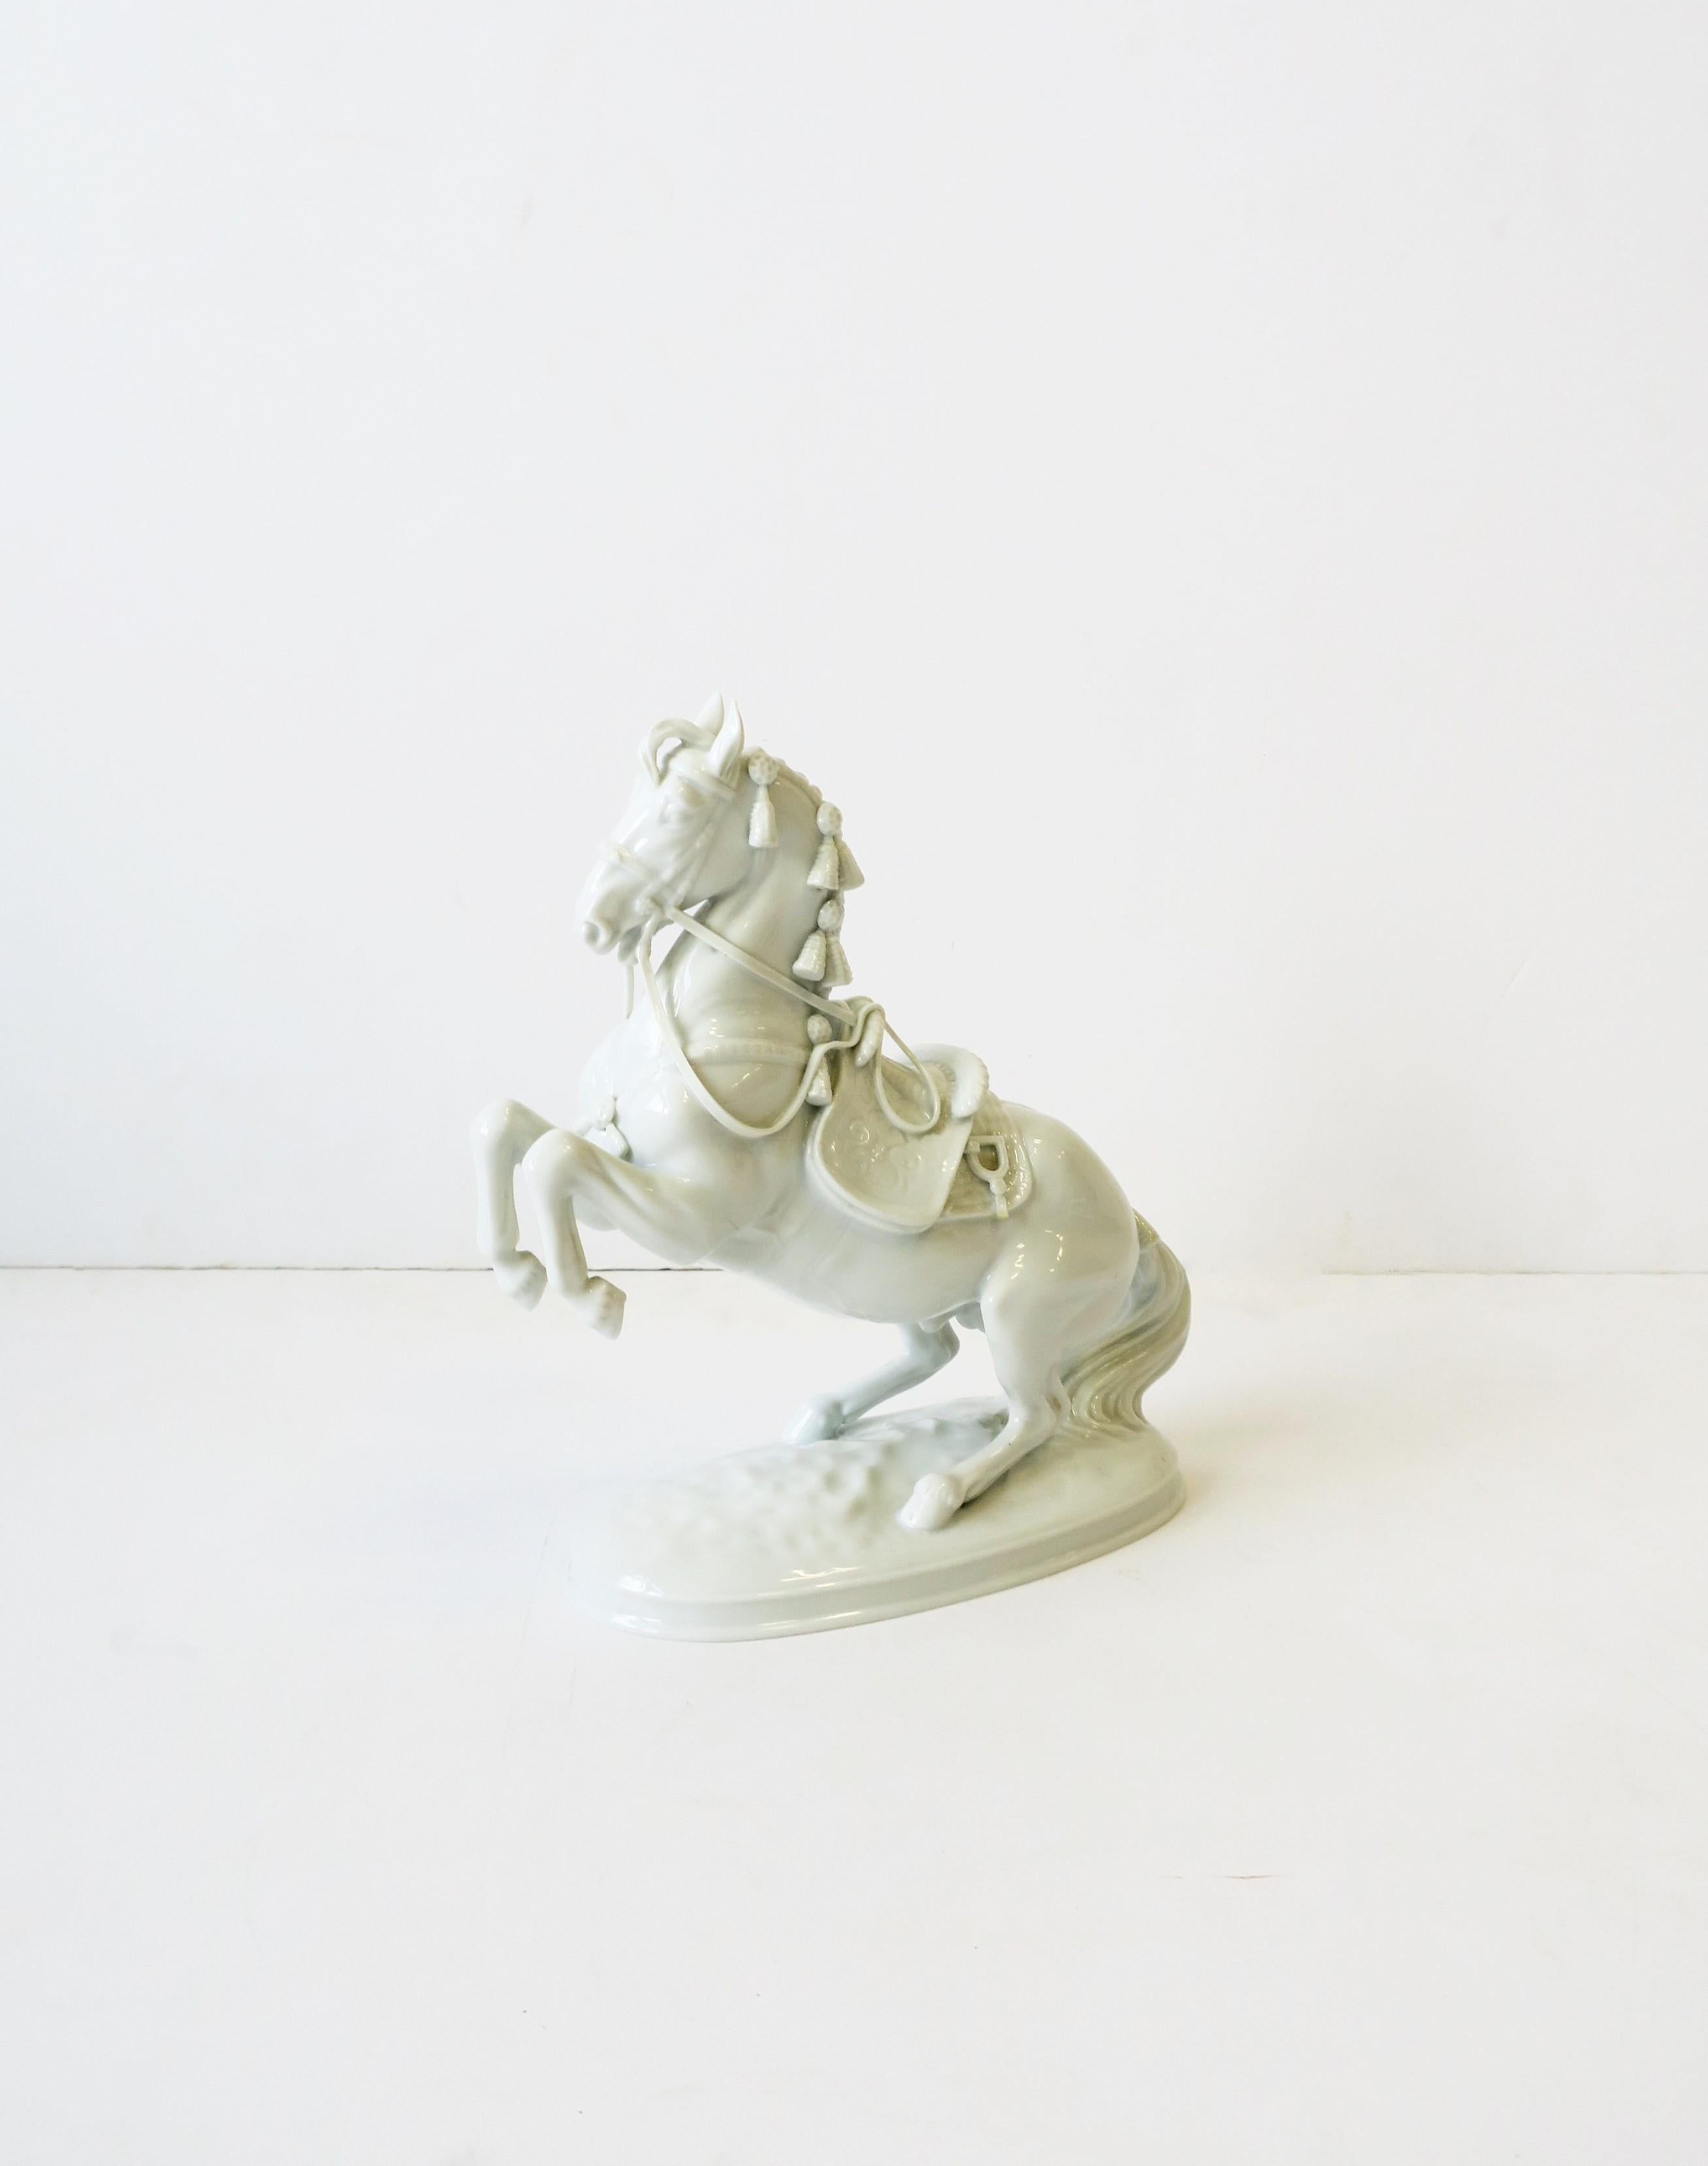 White Porcelain Equine Horse Sculpture Decorative Object from Austria  1